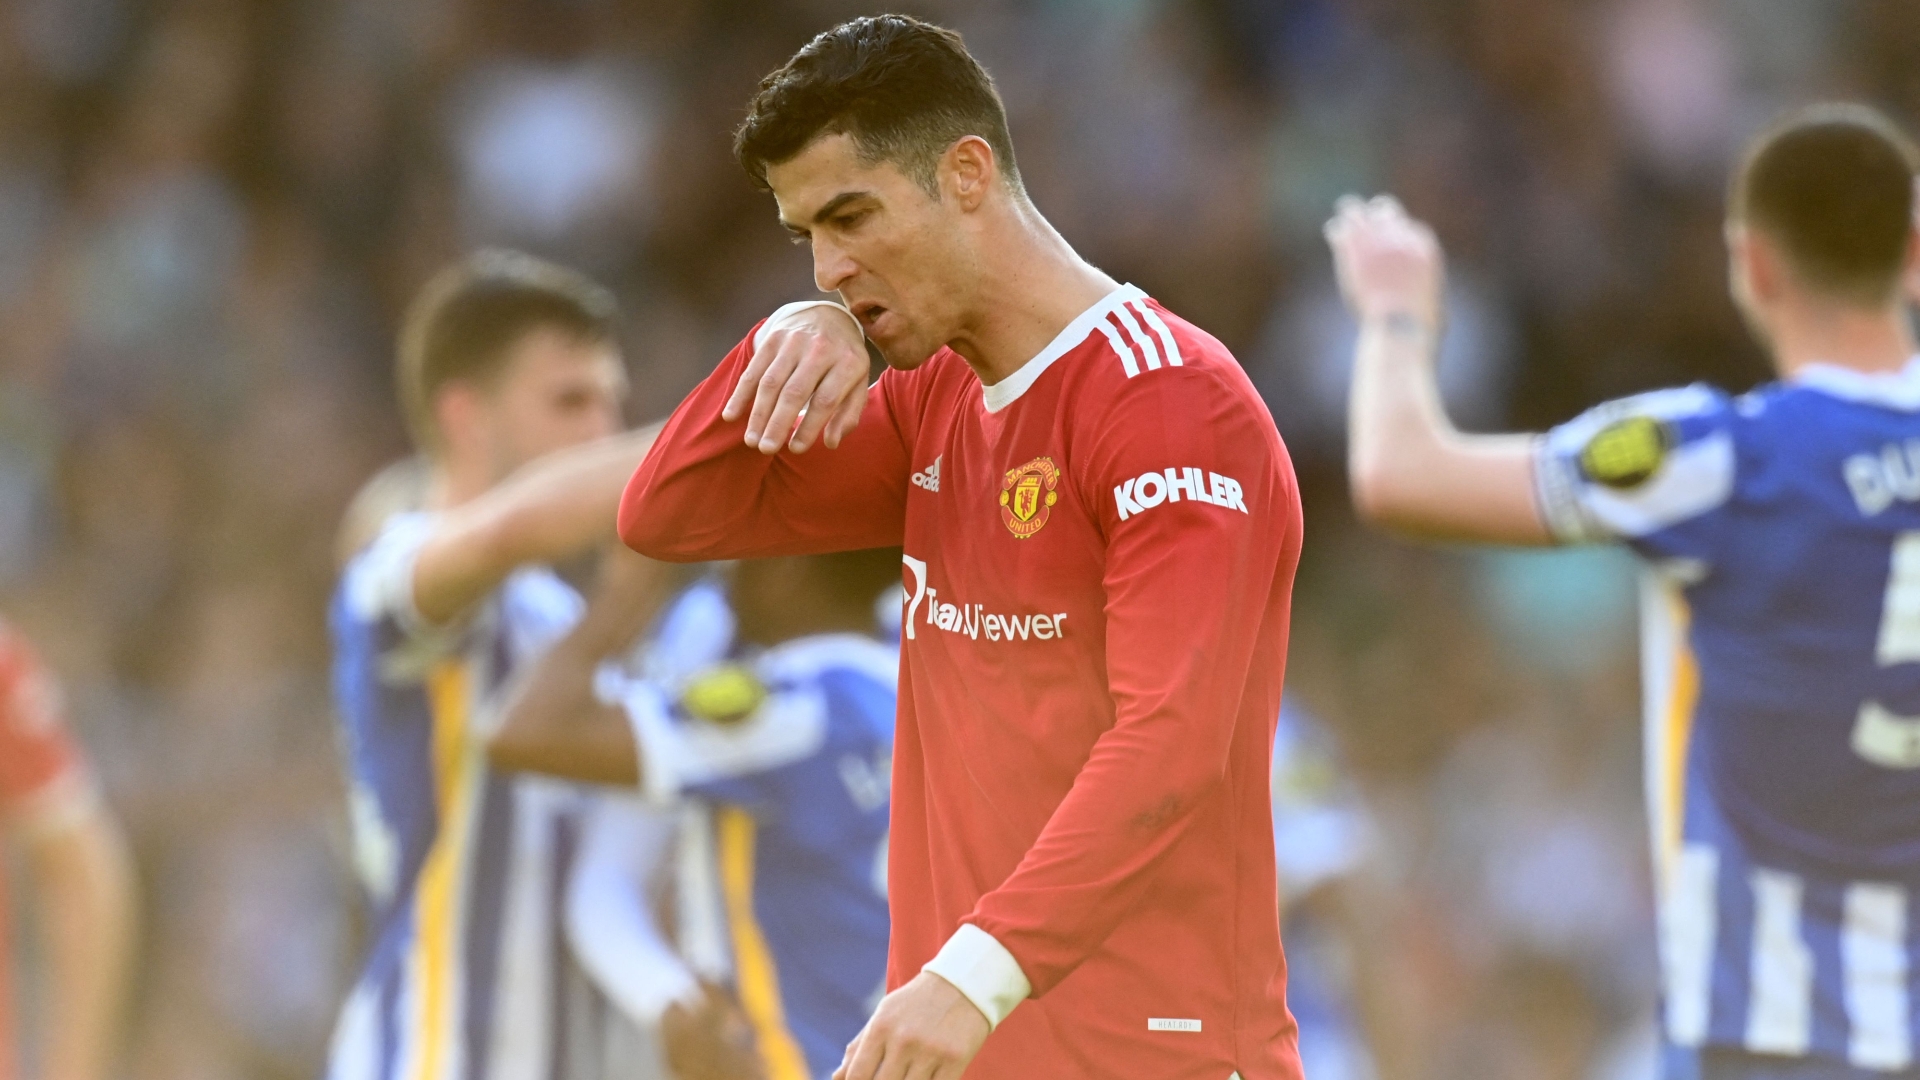 Ronaldo laughing 'summed up' Man Utd's abject display in Brighton thrashing, says Dublin